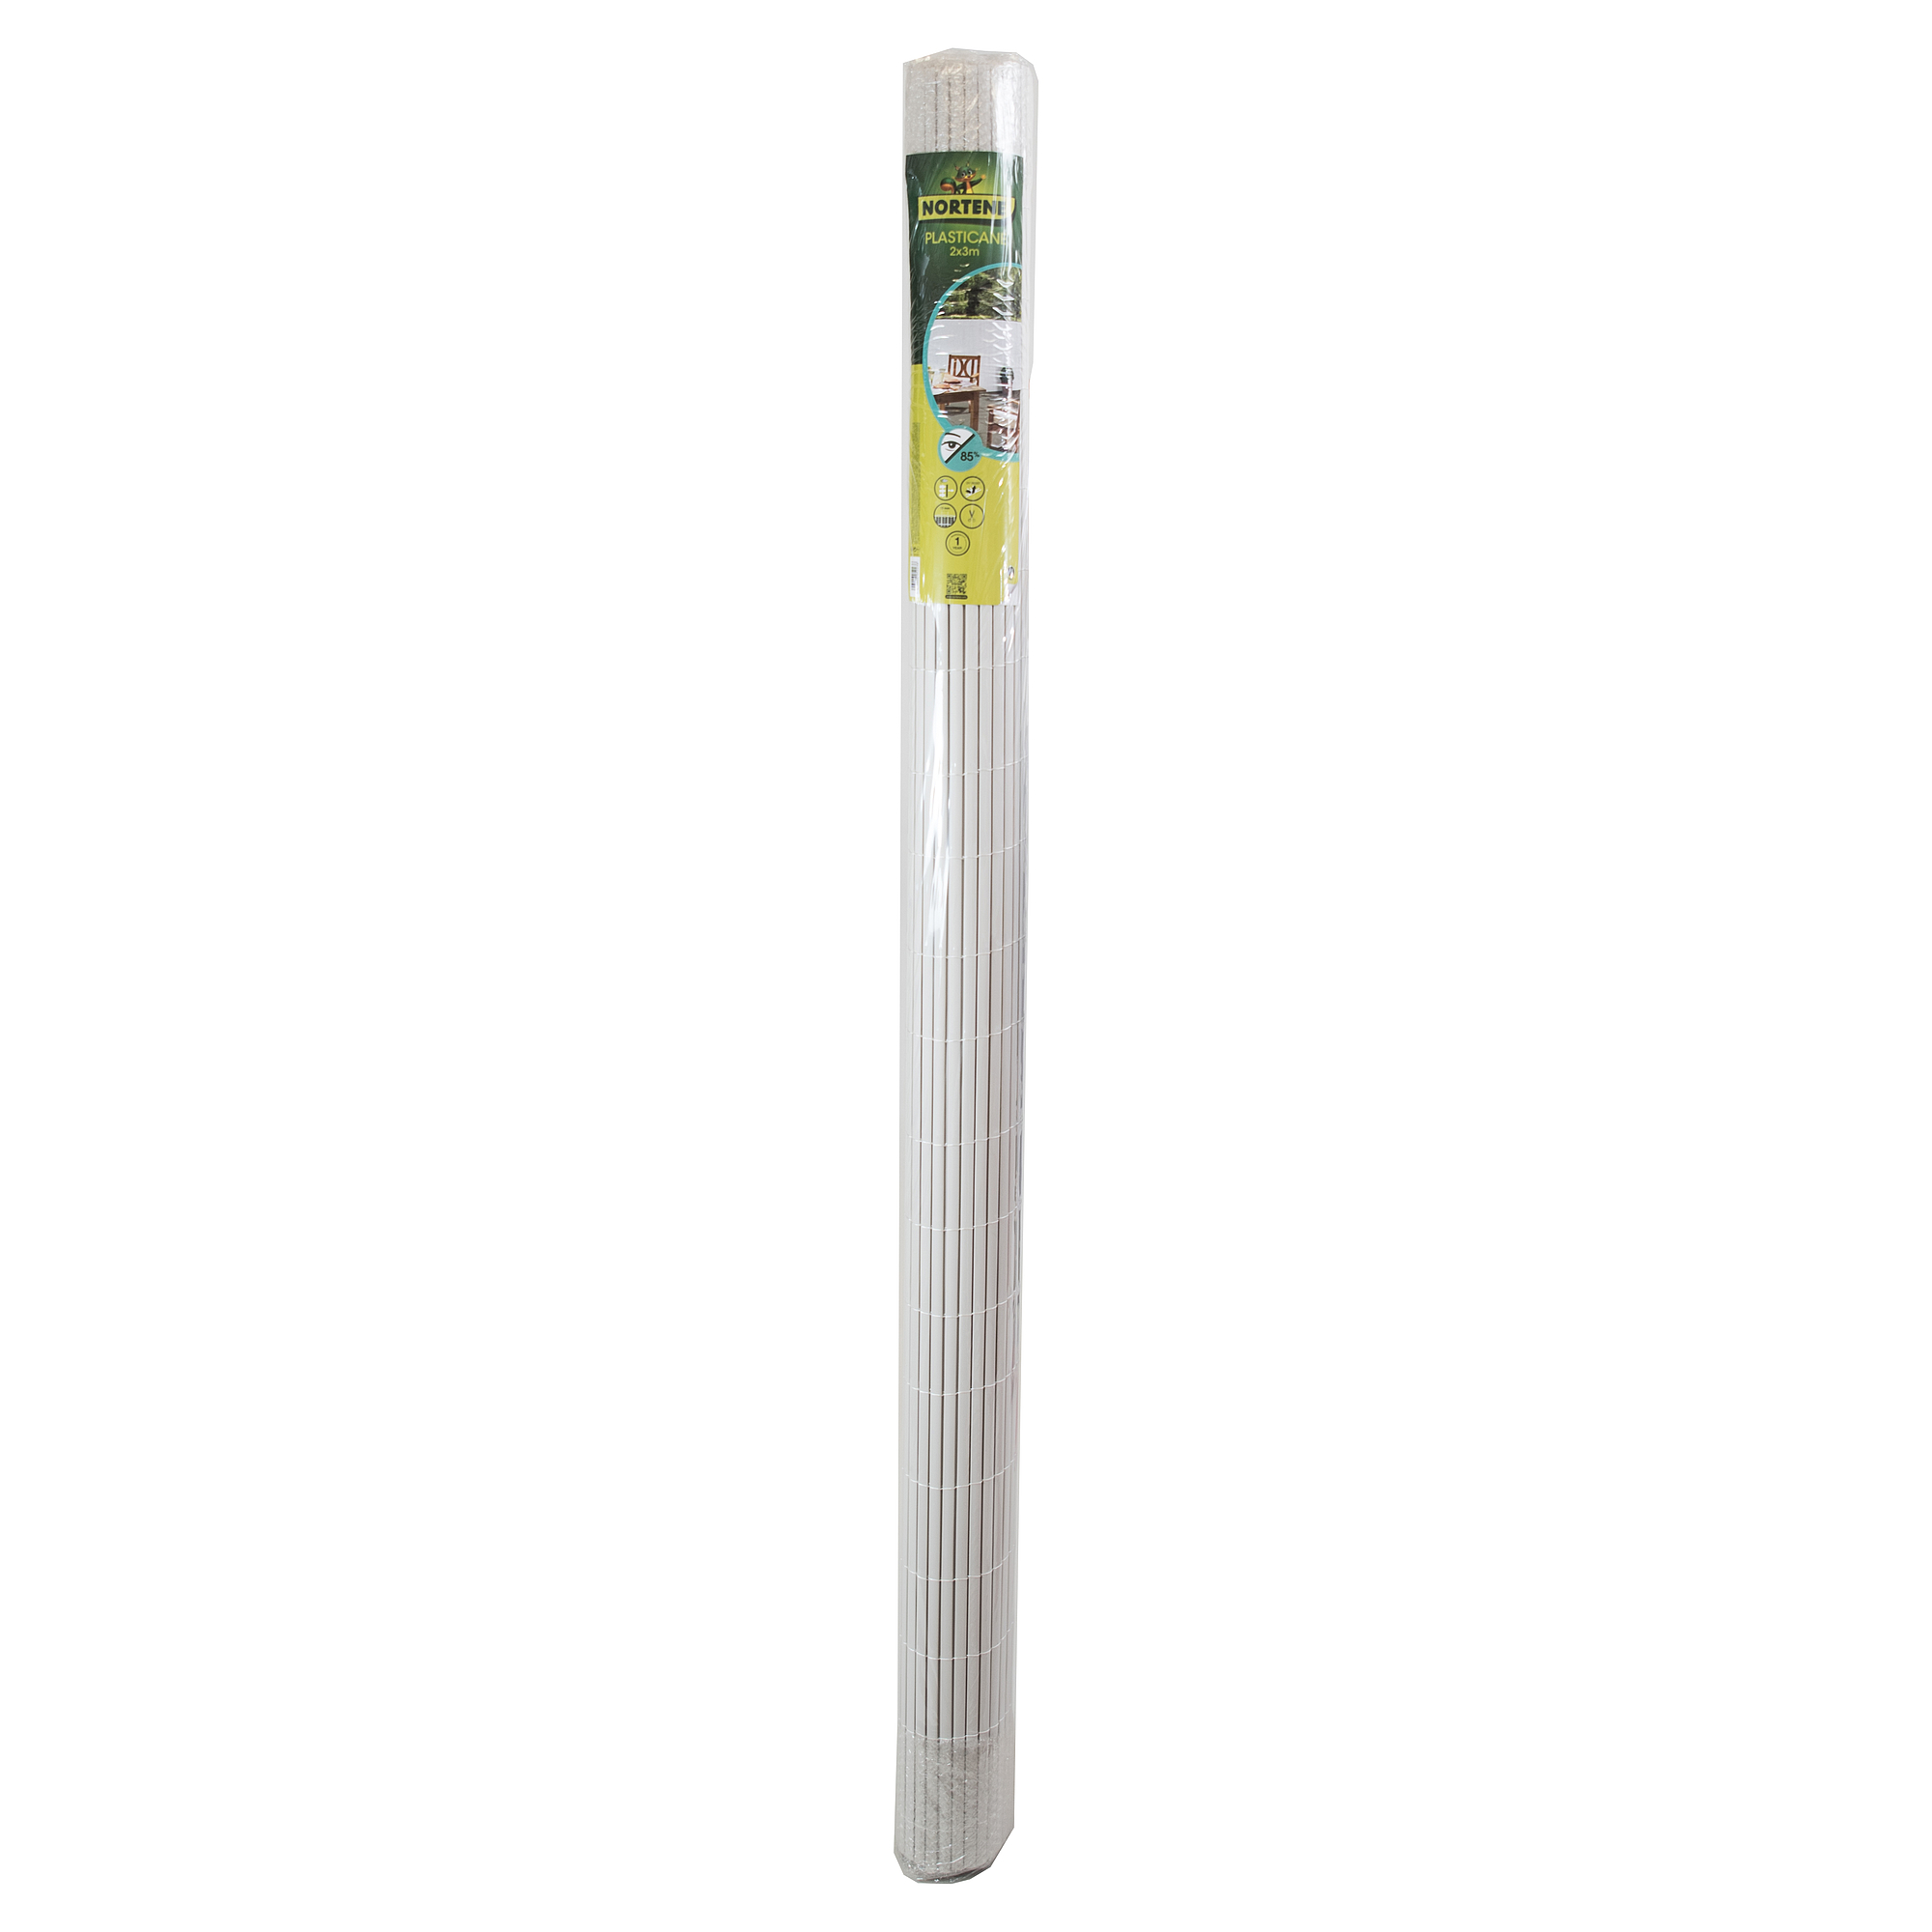 Nortene PLASTICANE OVAL ovális profilú műanyag nád, 13 mm, PVC - 1 x 3 m -  fehér  - 2012191